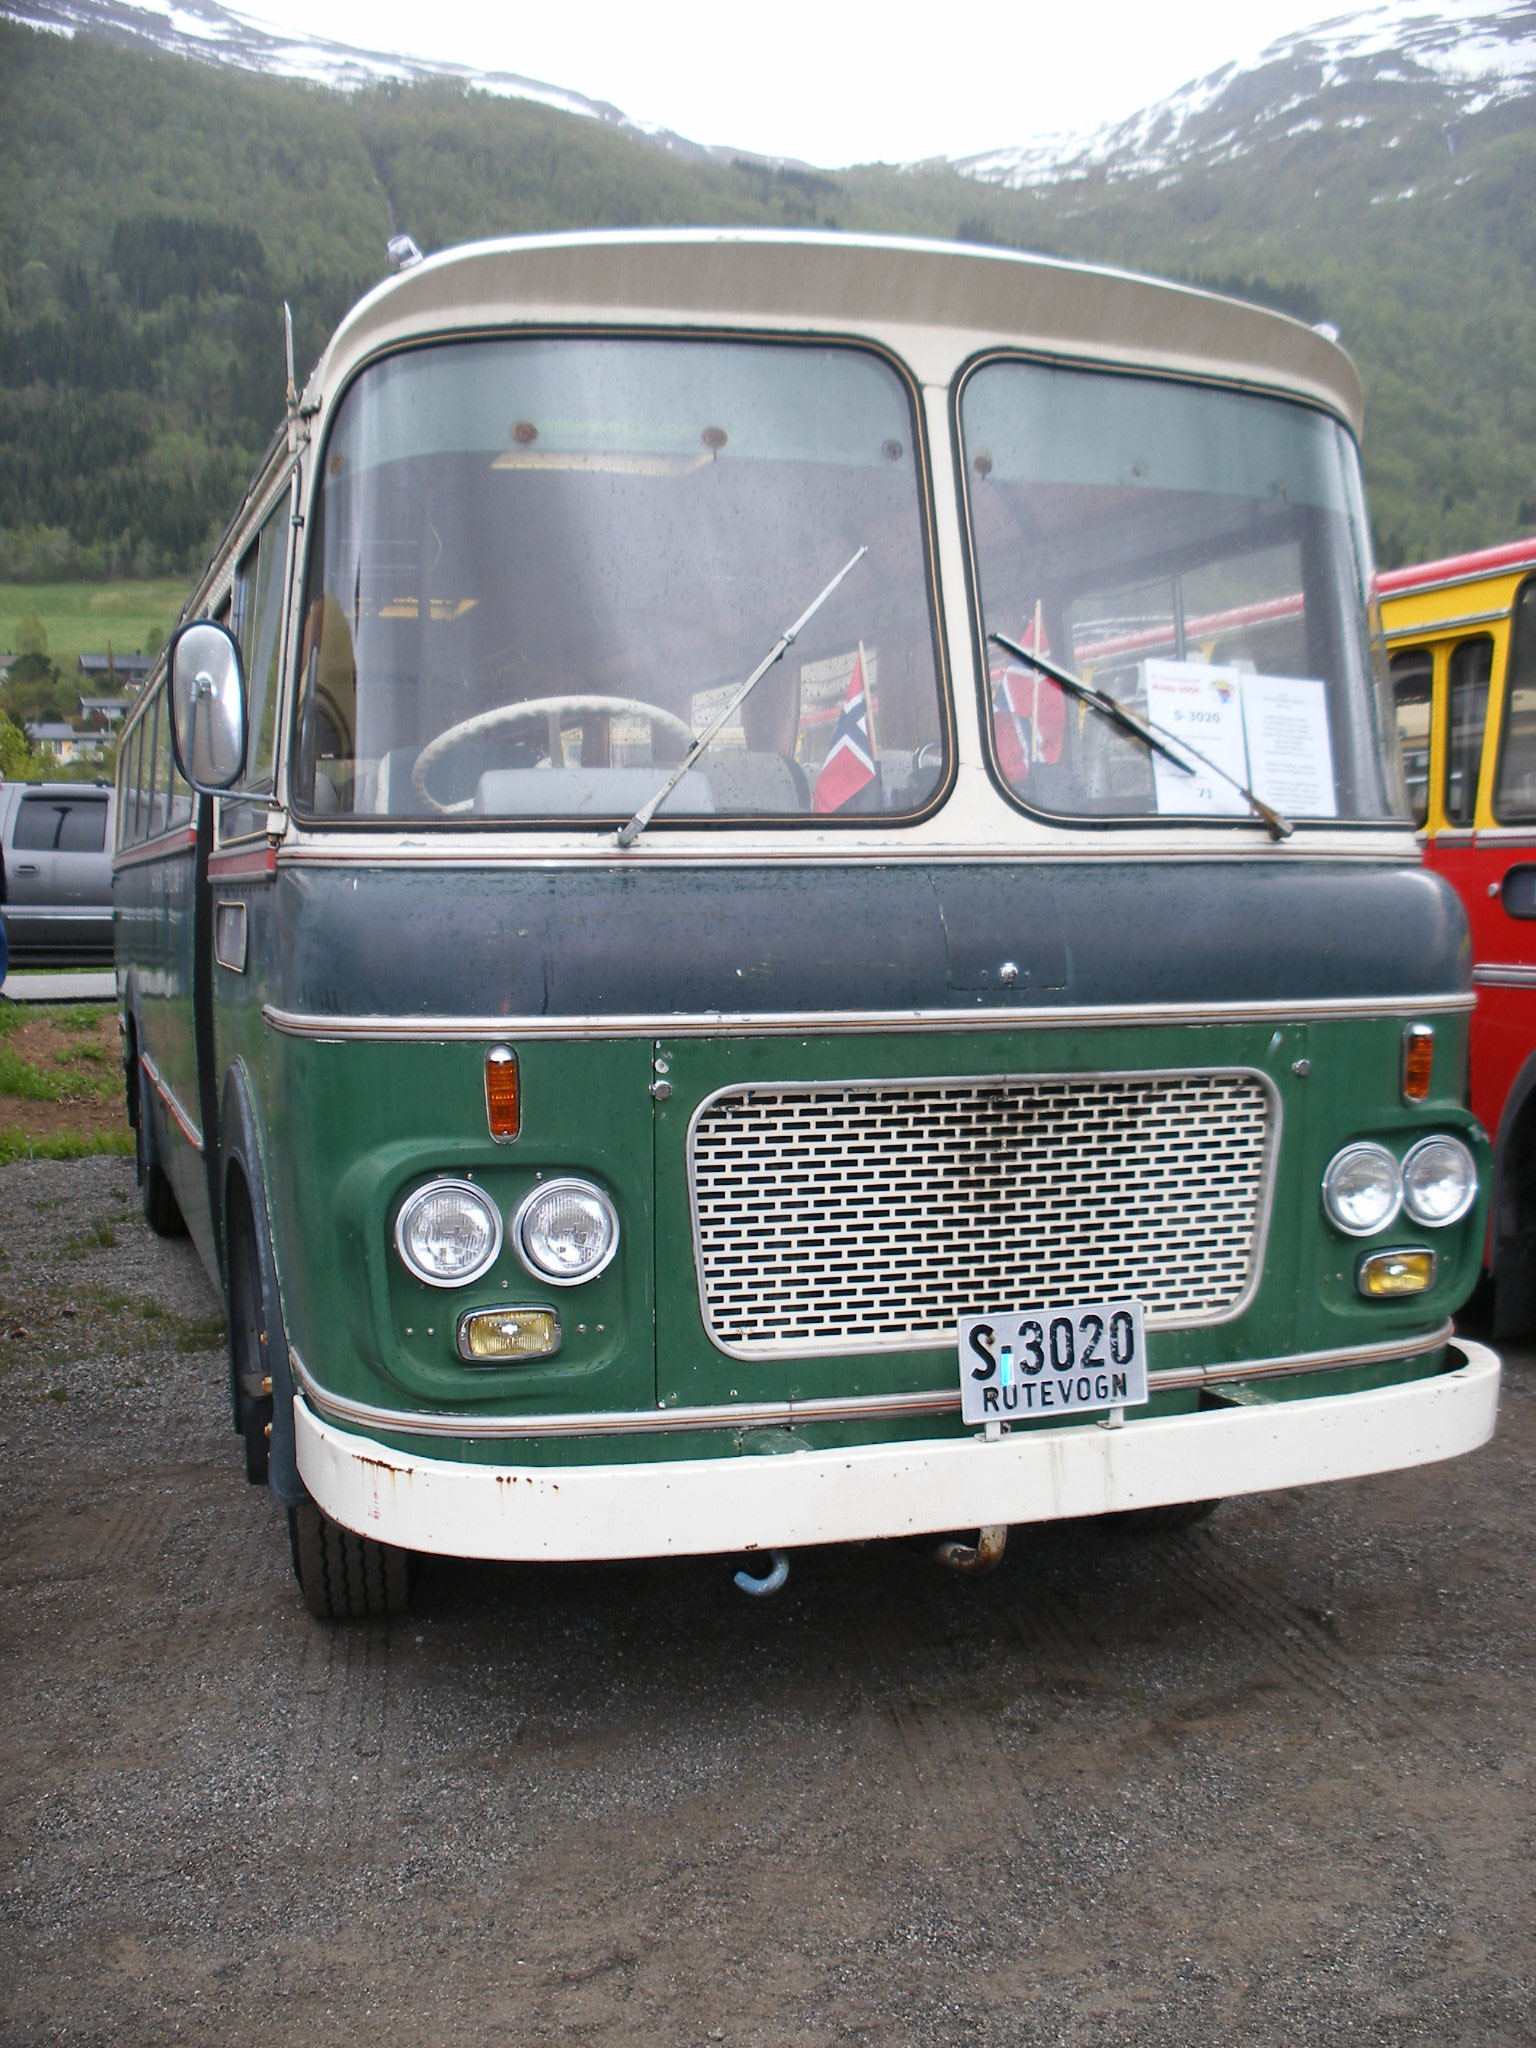 Unknown Bus